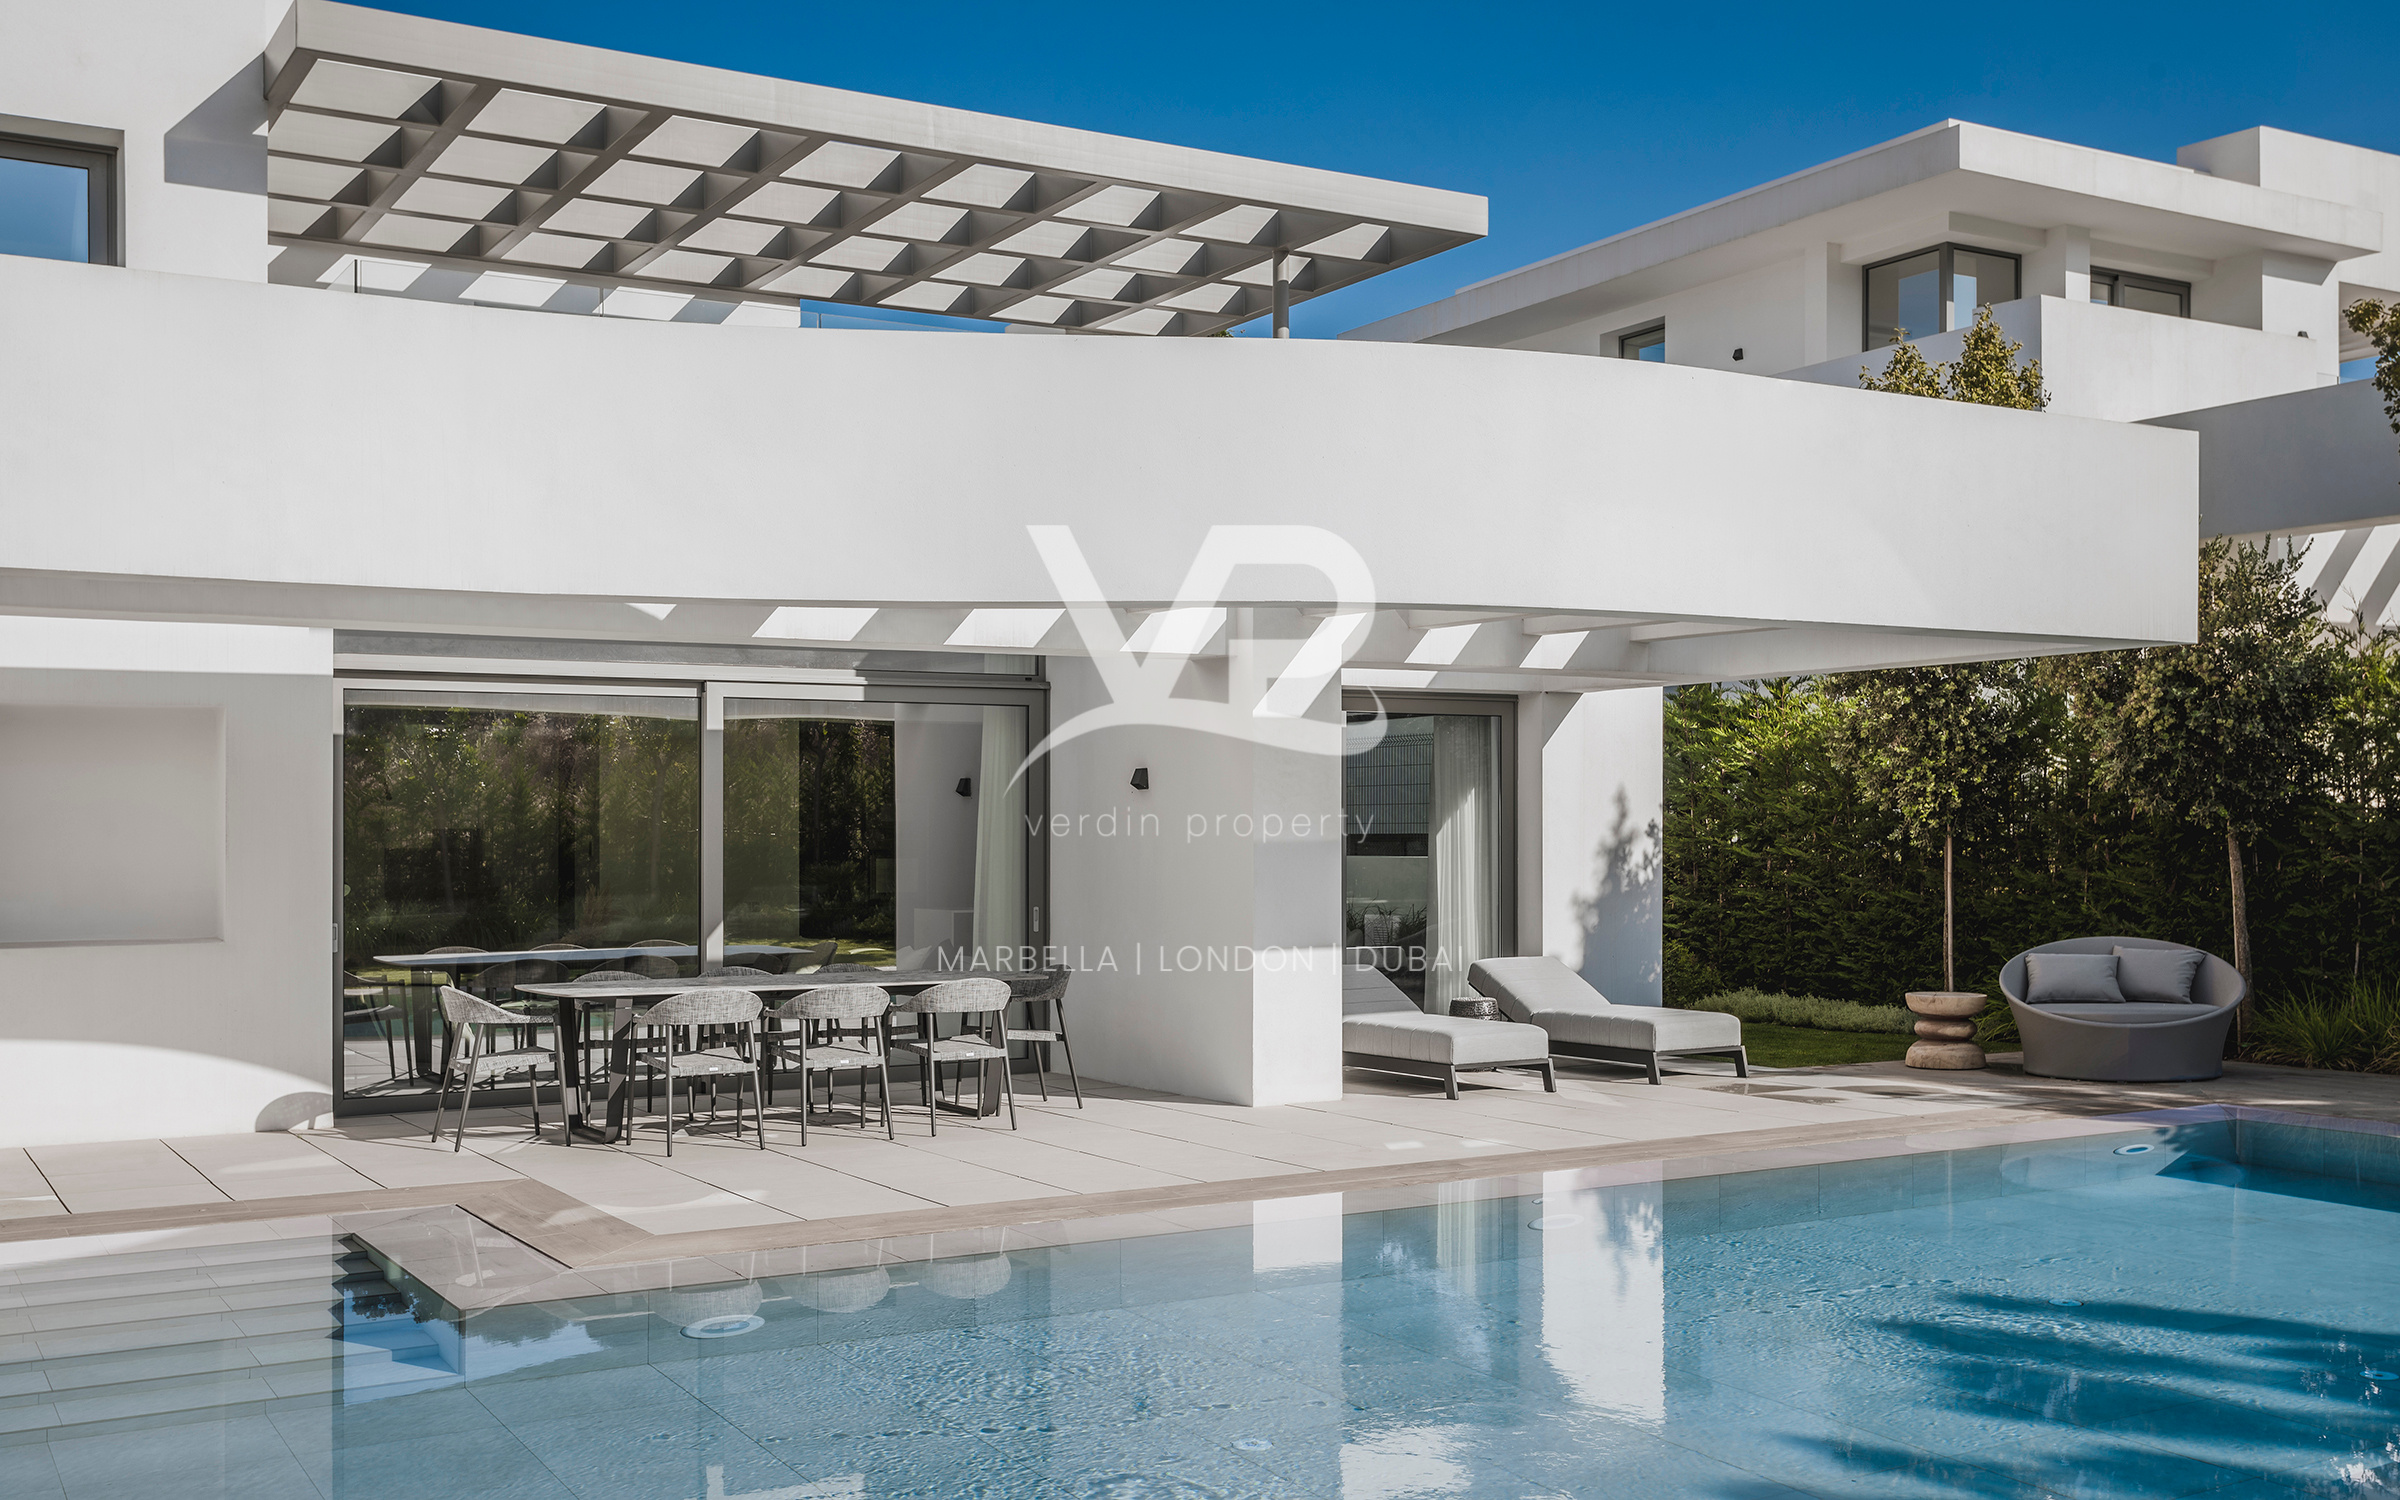 Casa Diana, new villa in Kings Hills - Verdin Property